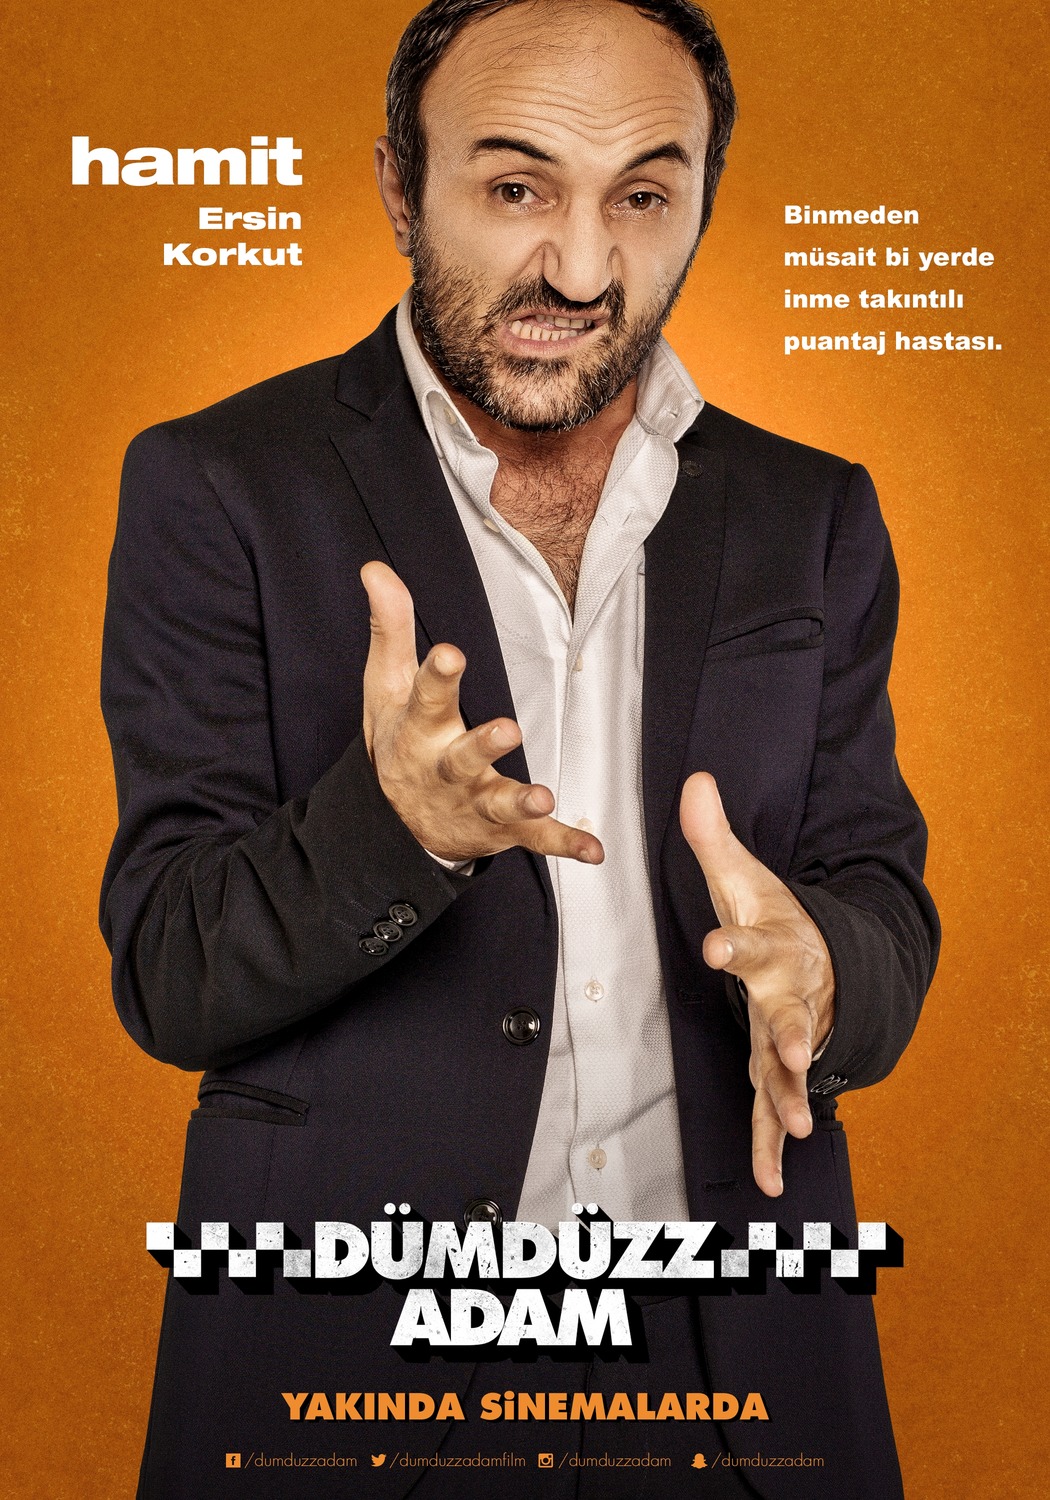 Extra Large Movie Poster Image for Dümdüzz Adam (#13 of 16)